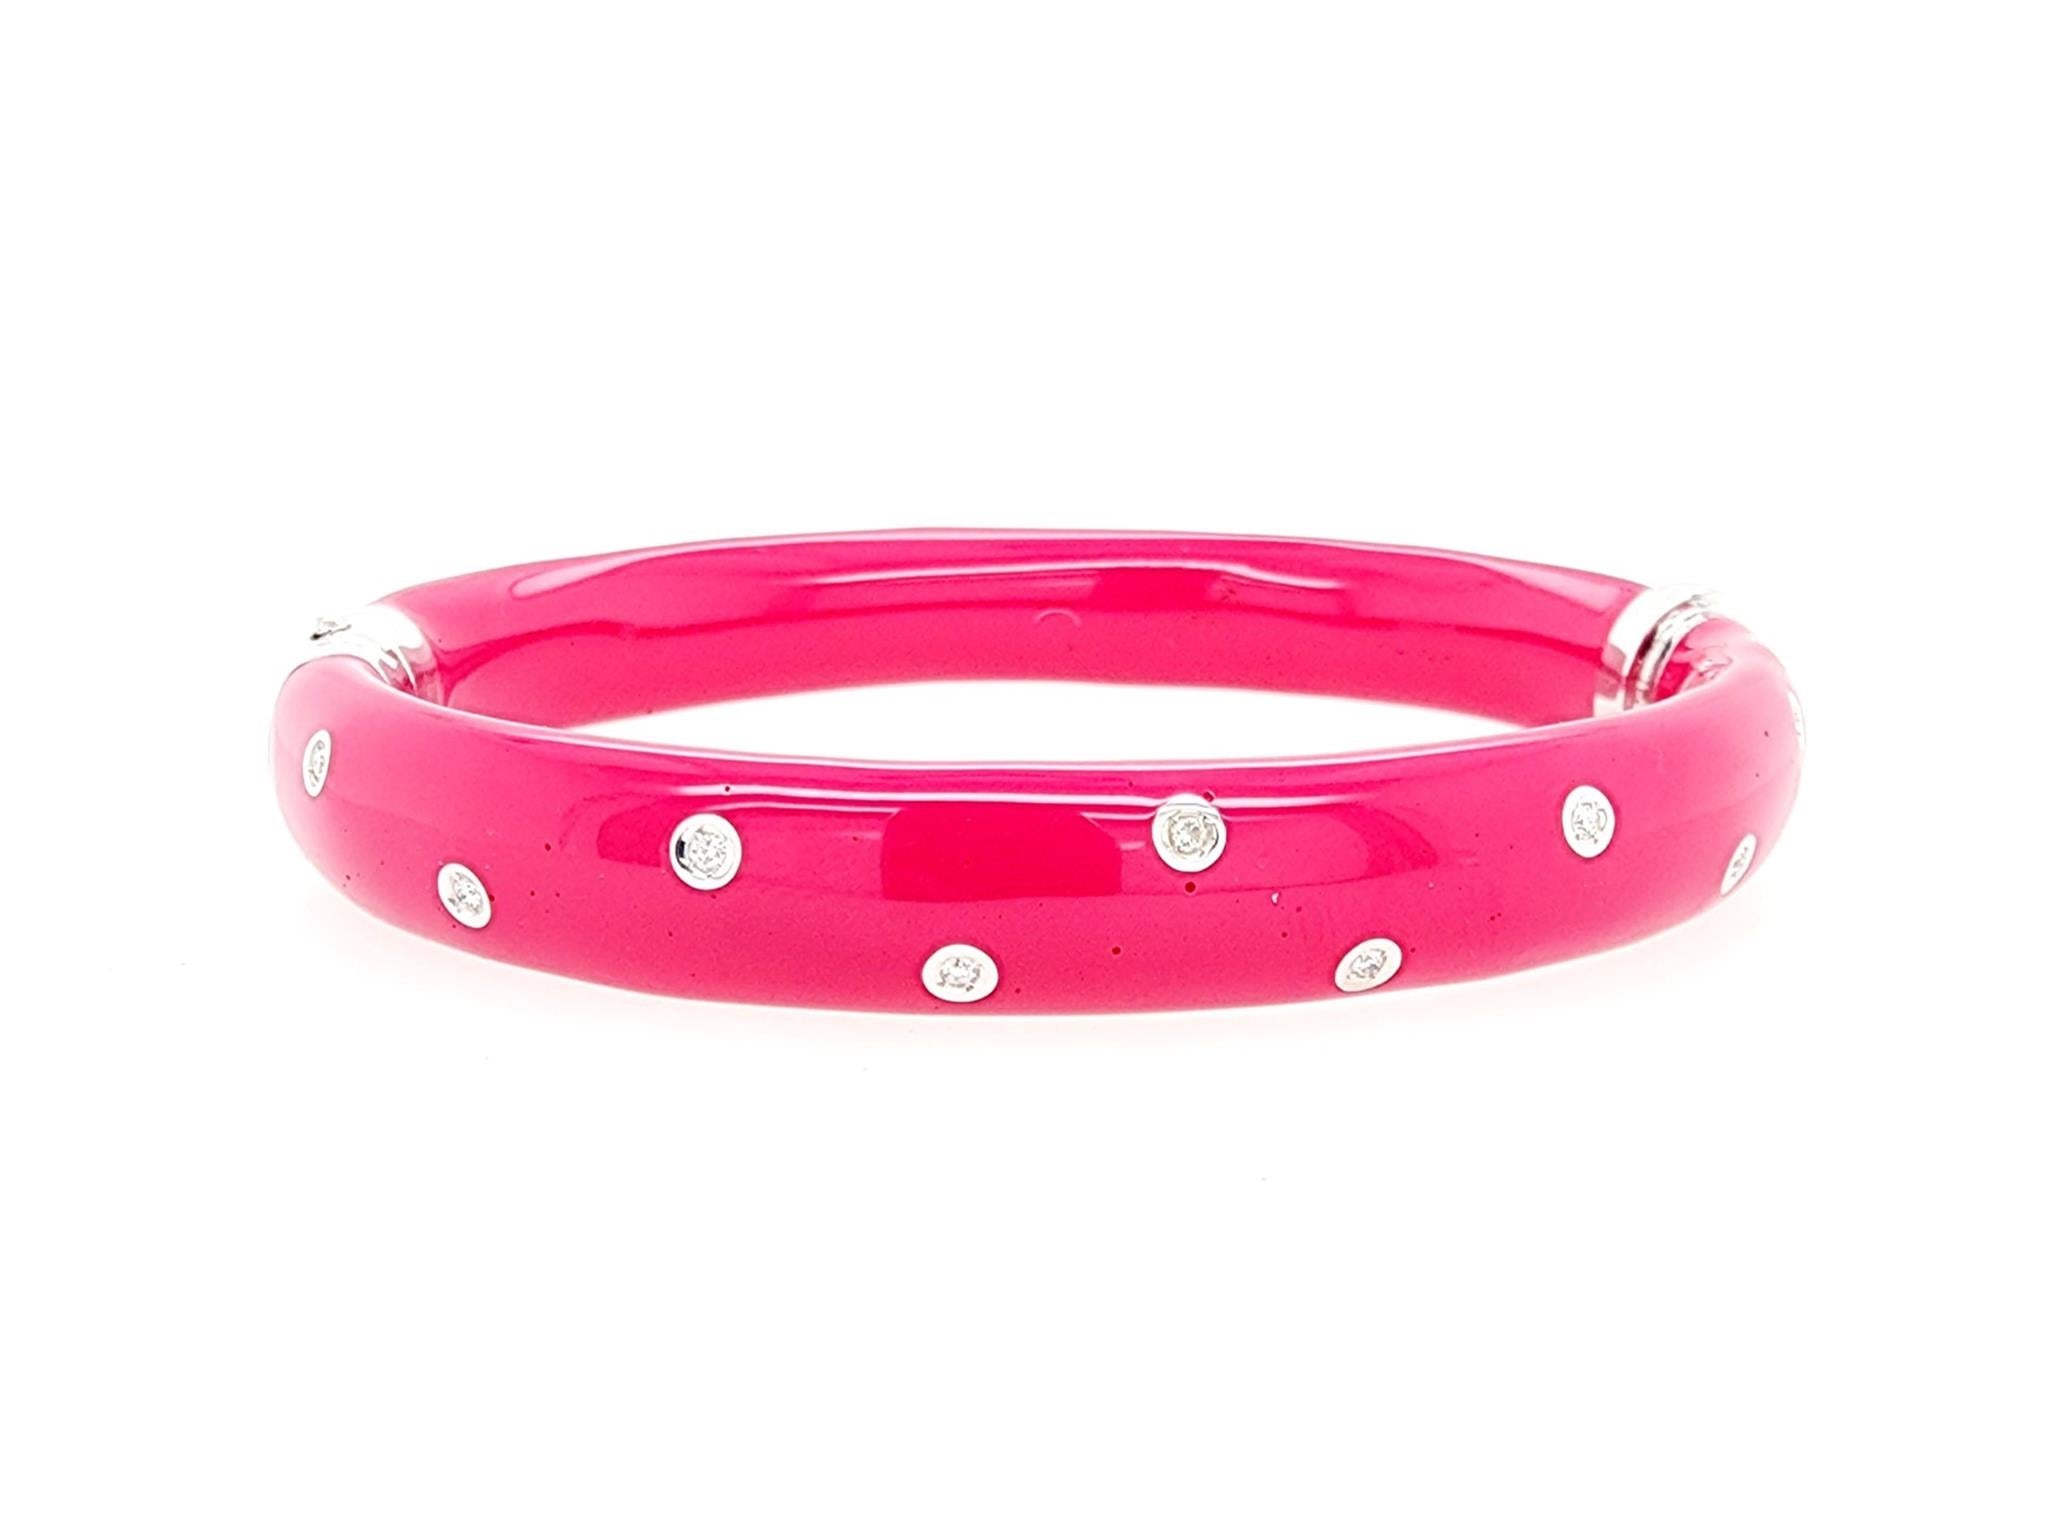 Pink and gold enamel bangle bracelet with spring hinge OS | eBay